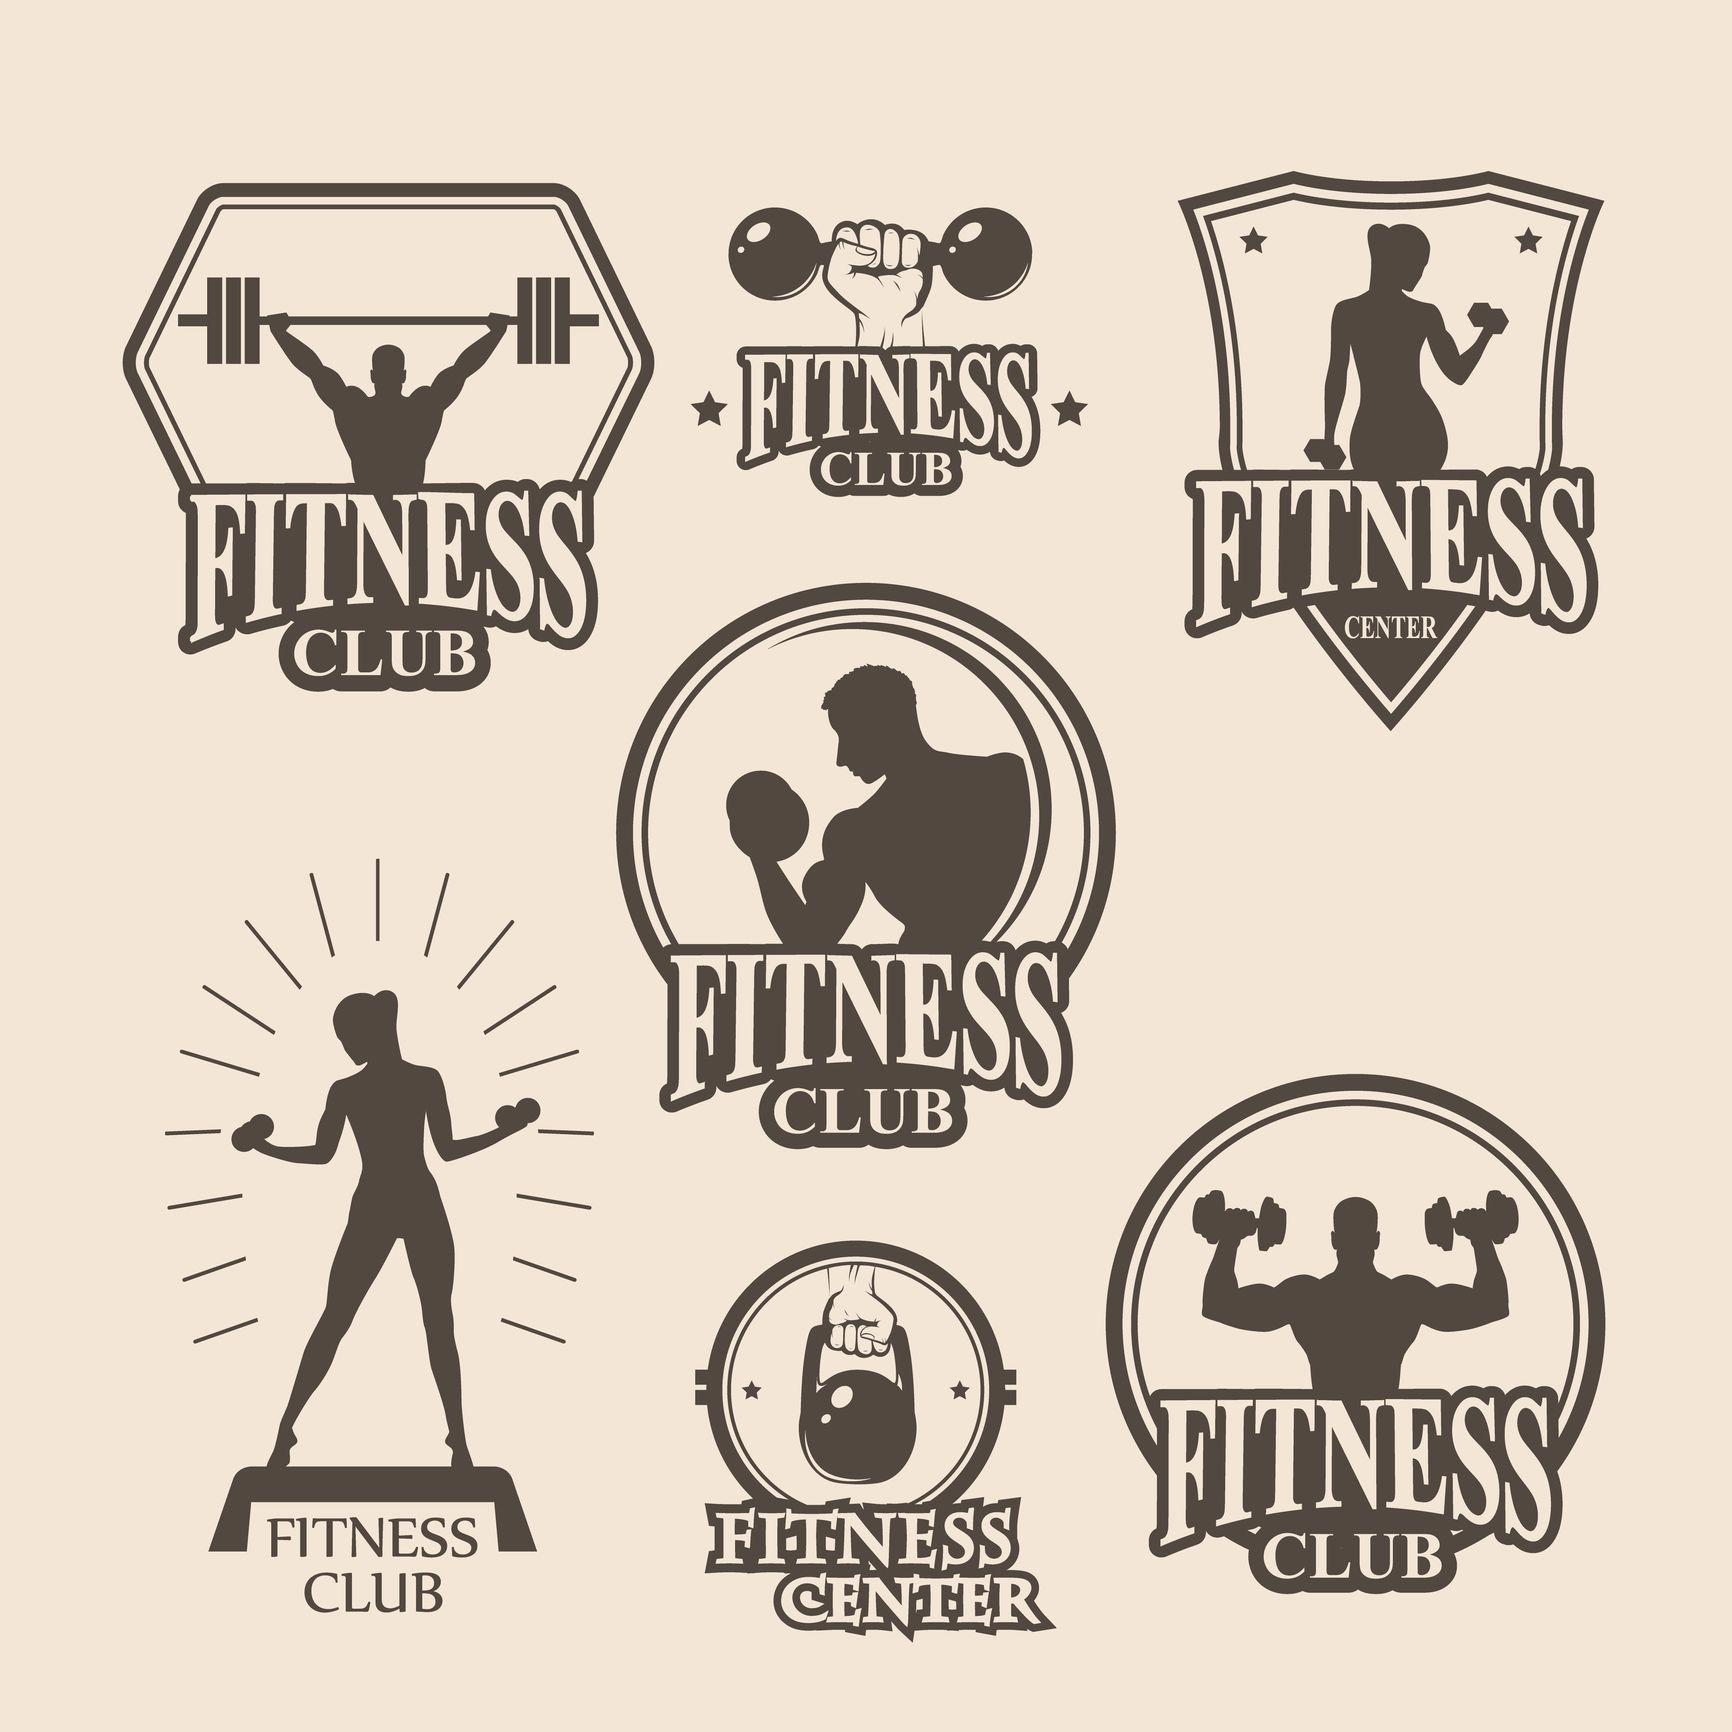 Fitness Logo - Design Elements of a Fitness Logo That Motivates • Online Logo ...